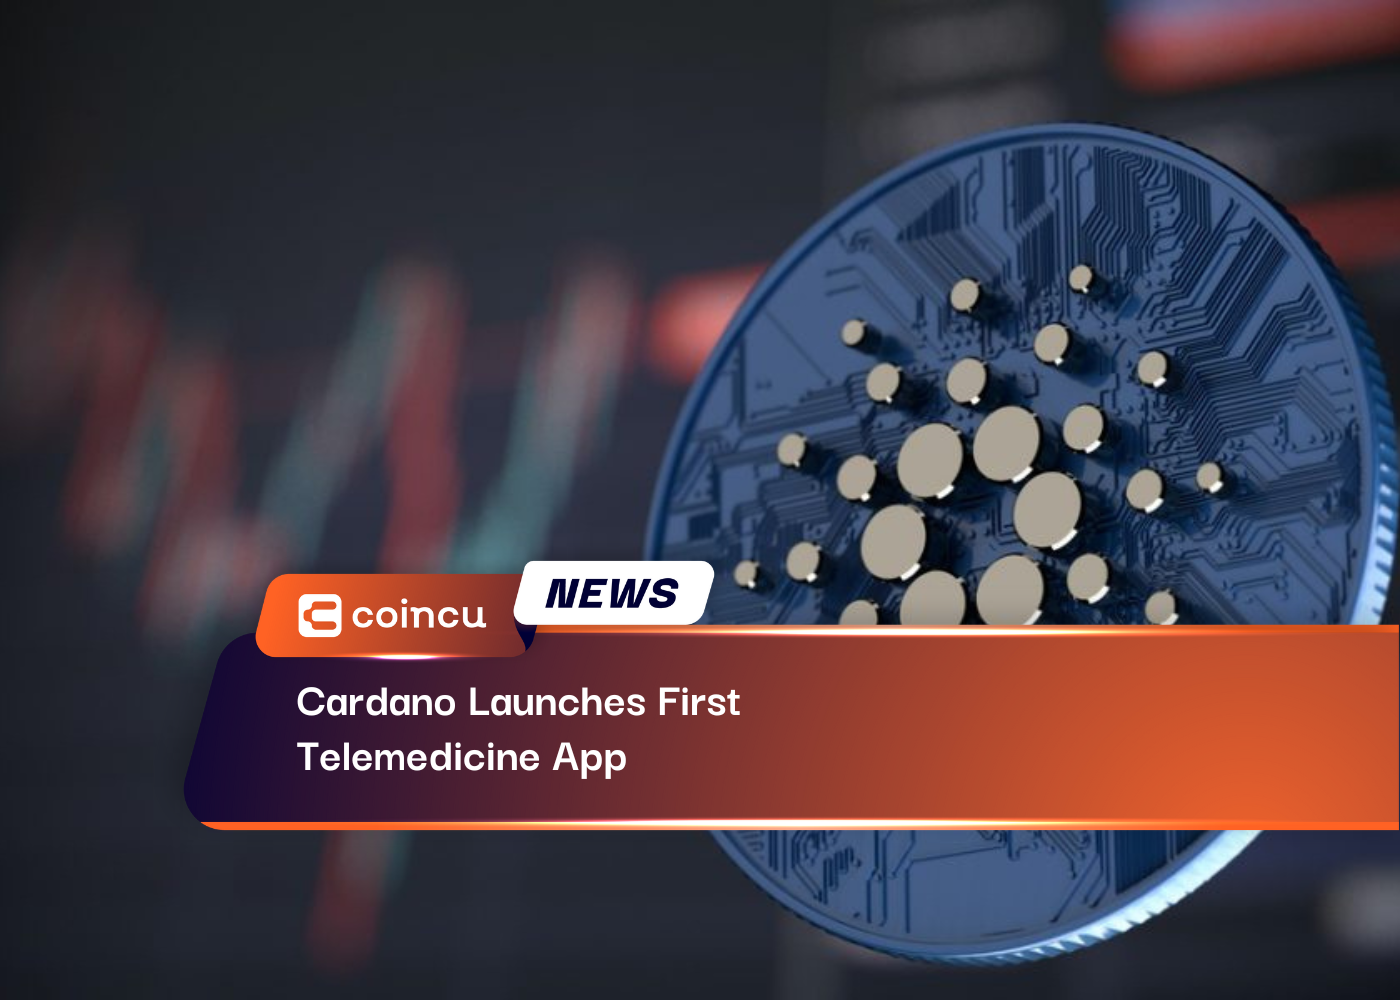 Cardano Launches First Telemedicine App